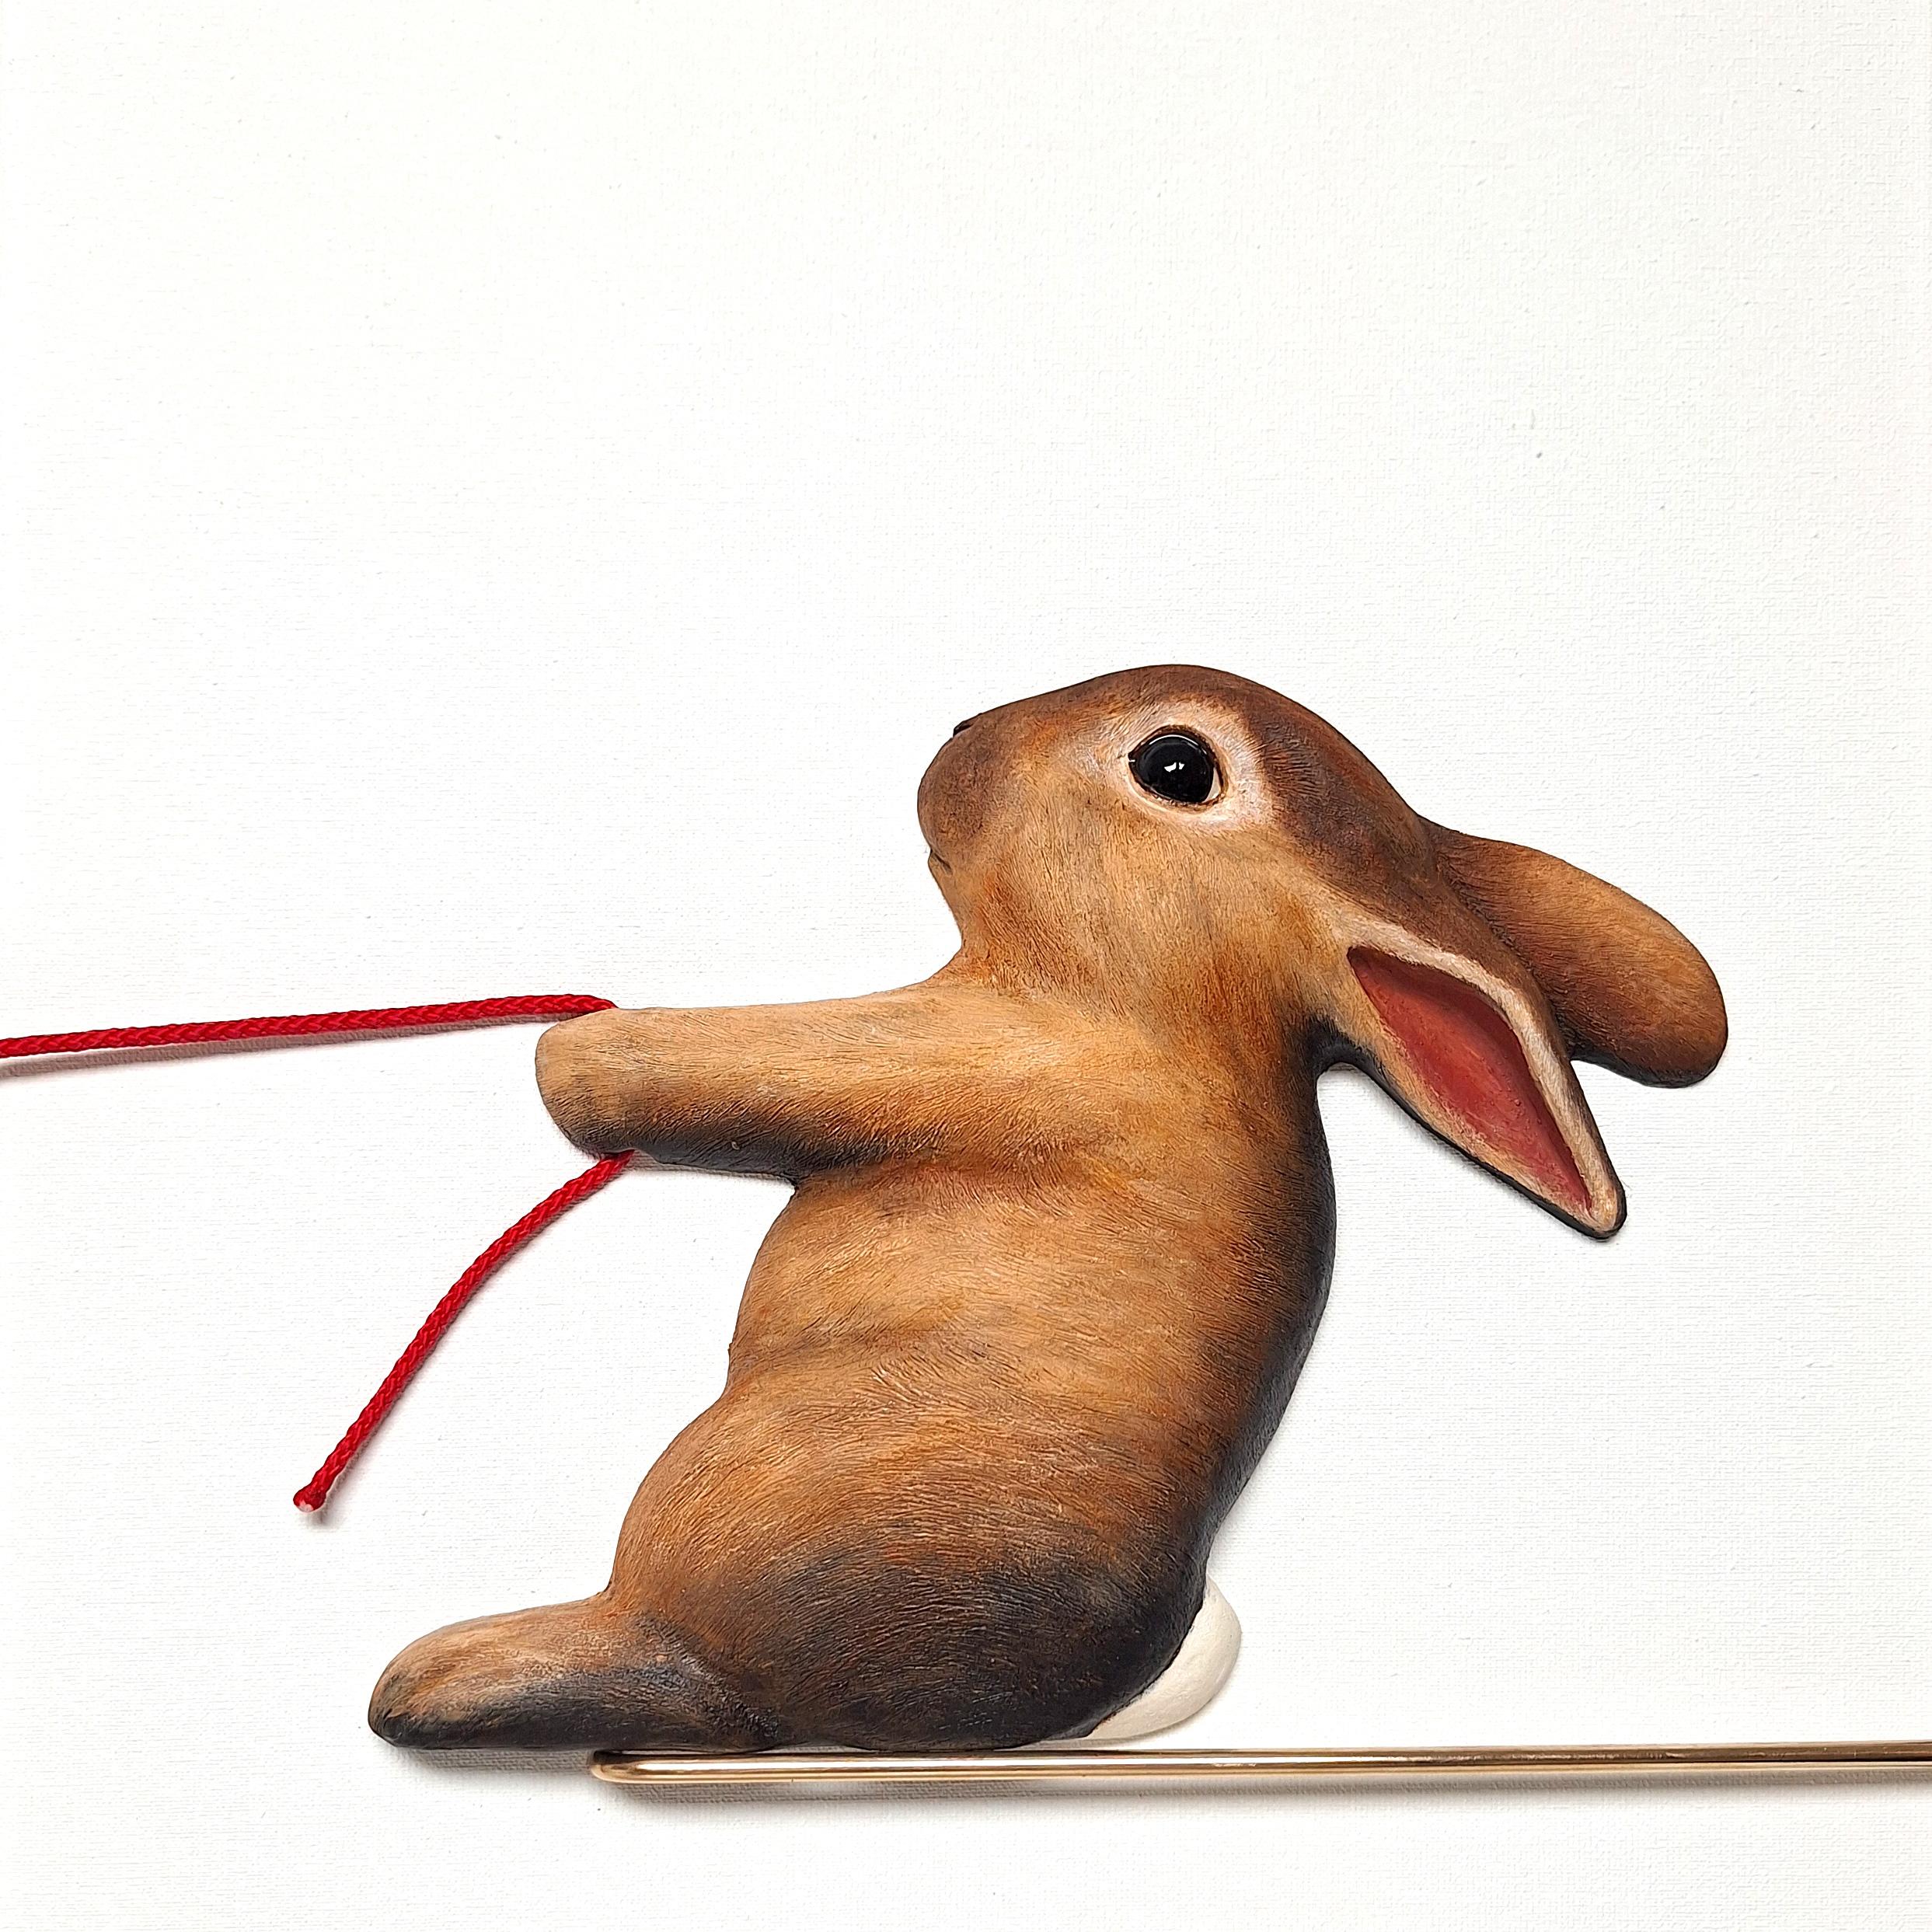 Mine-original realism wildlife bunny sculpture-painting-Artwork-contemporary Art - Modern Sculpture by Henk Jan Sanderman